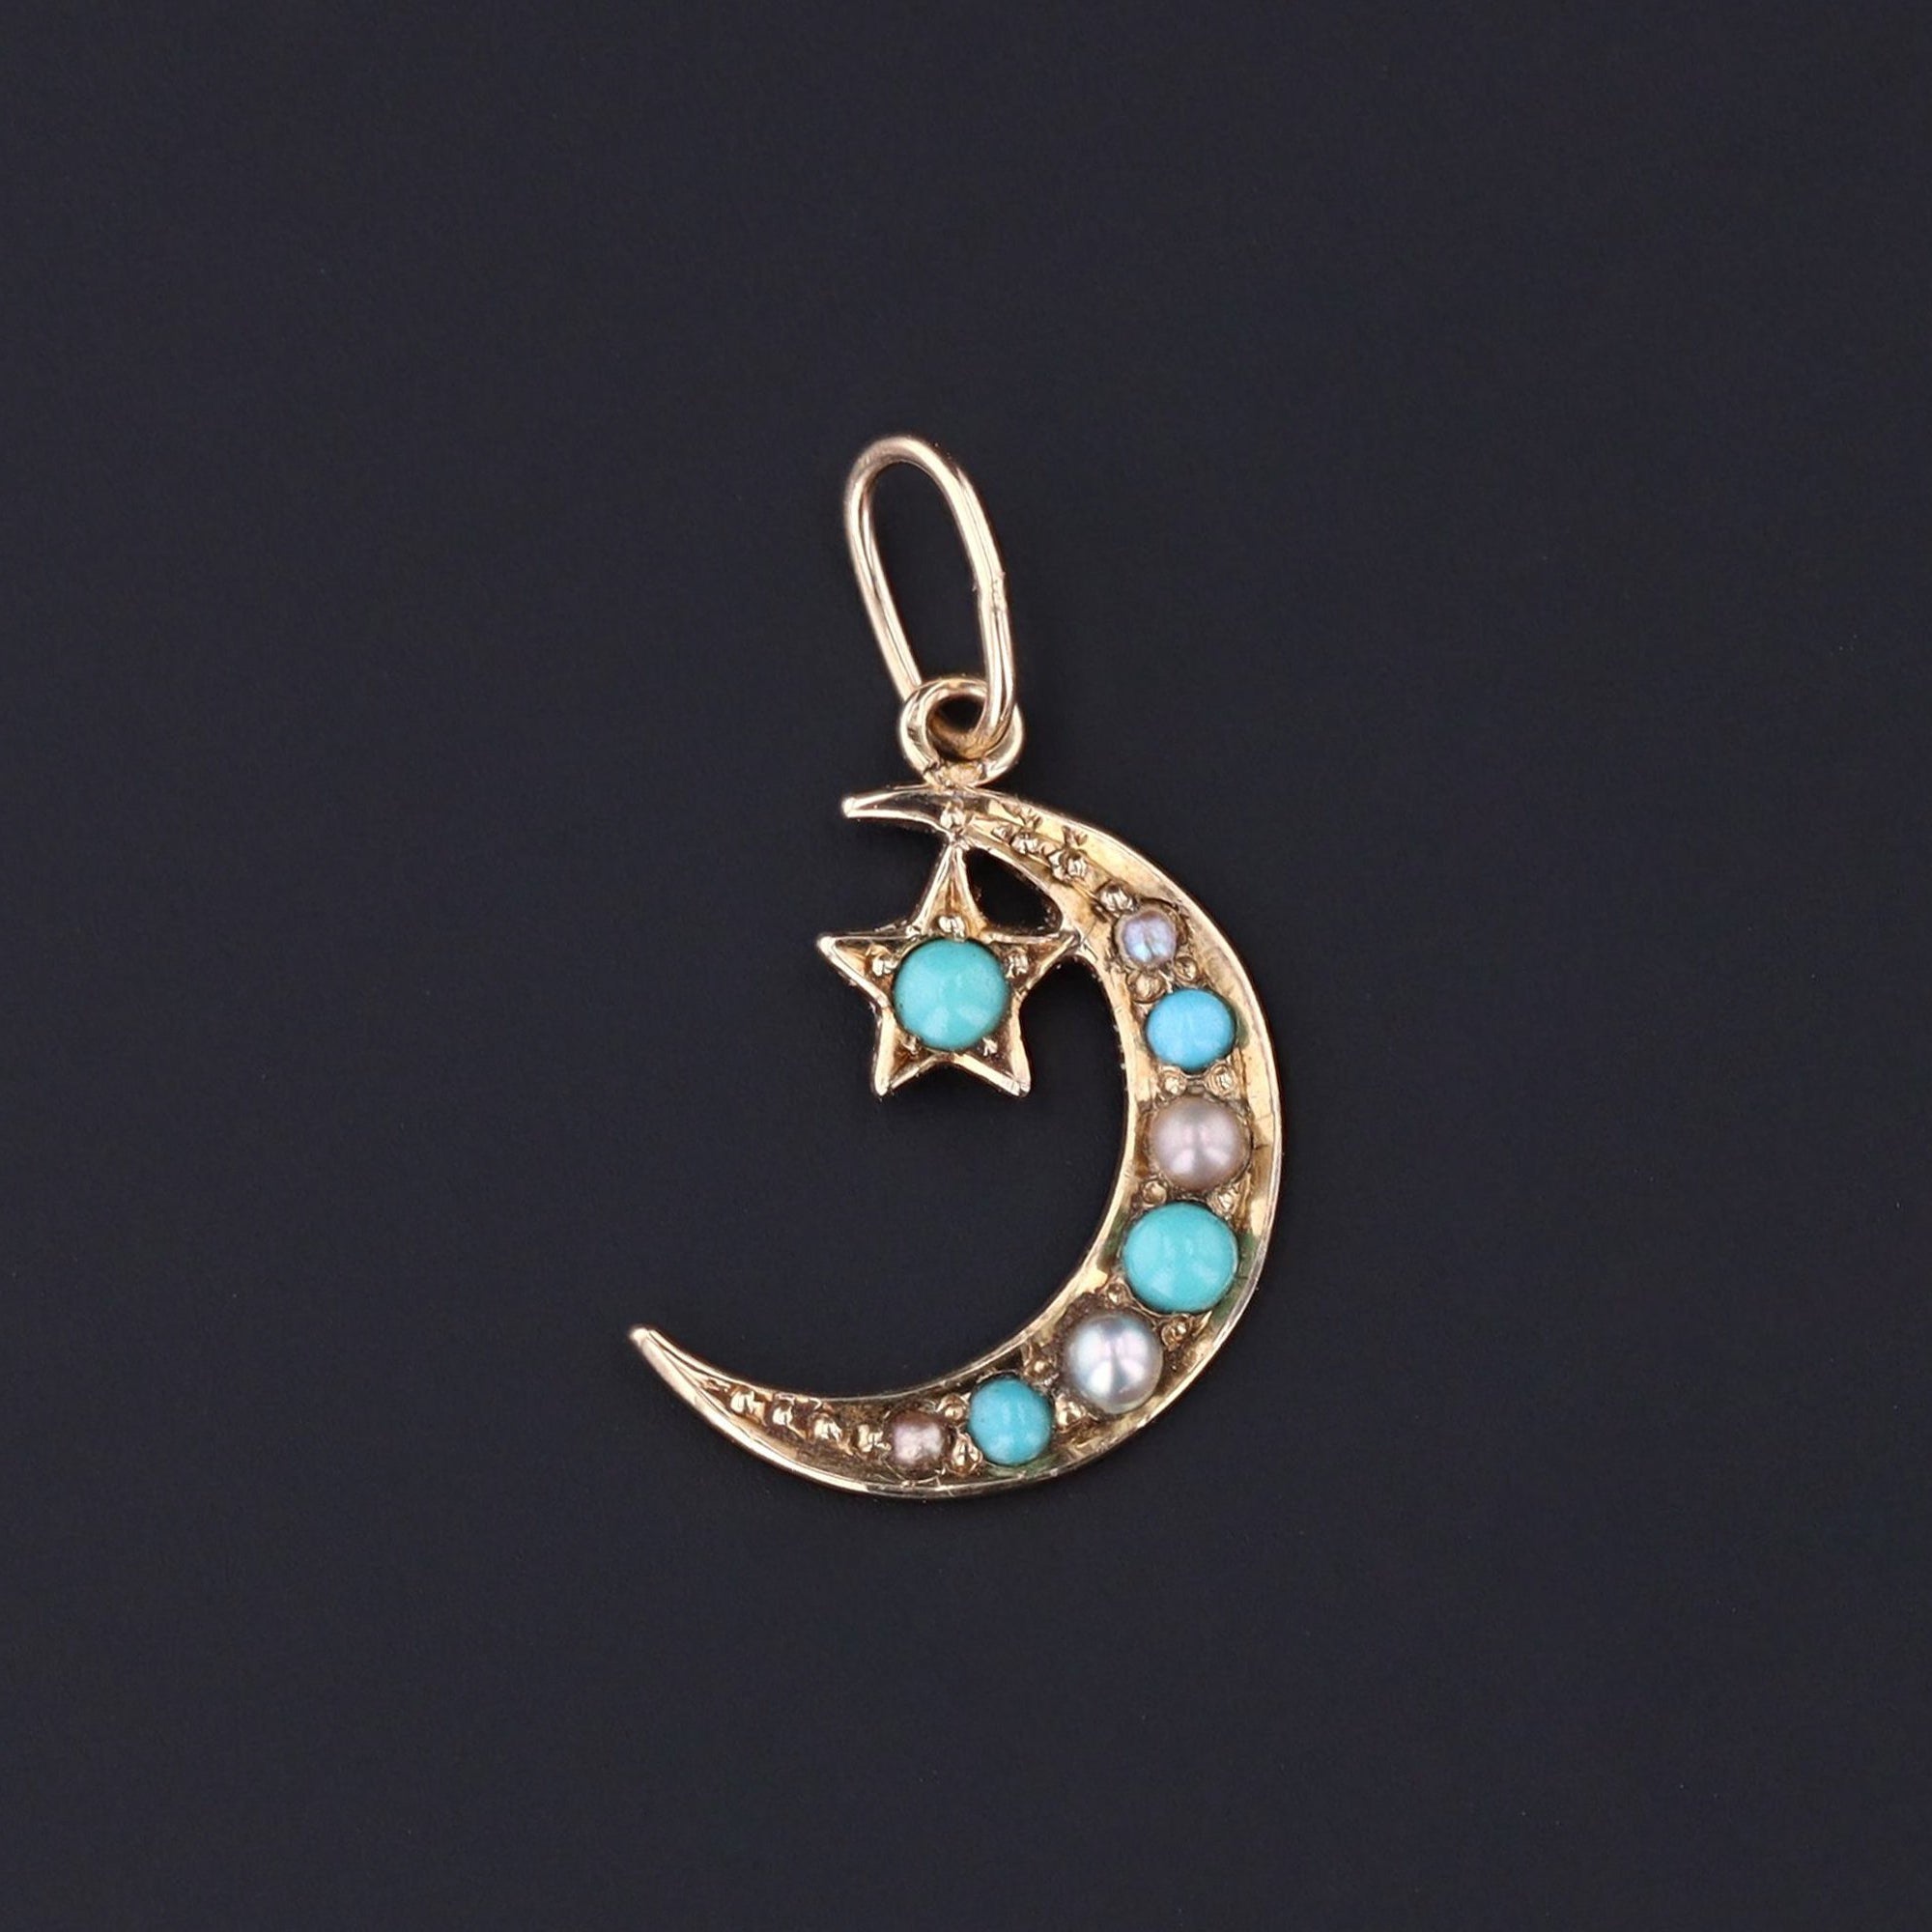 Crescent Moon & Star Charm | 14k Gold Charm | Turquoise and Pearl Charm | Crescent Moon Charm